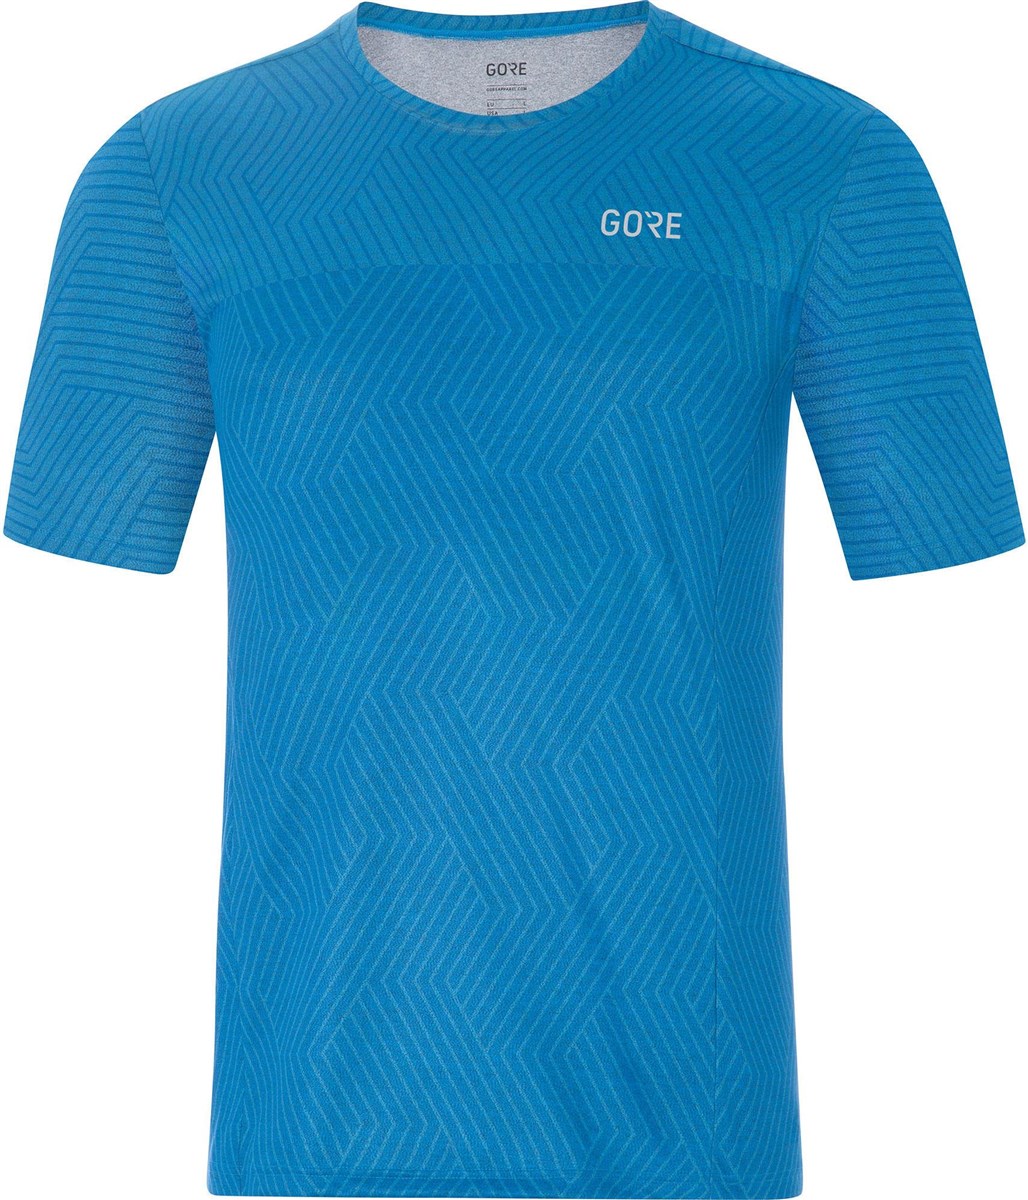 Gore R3 Optiline Short Sleeve Jersey product image